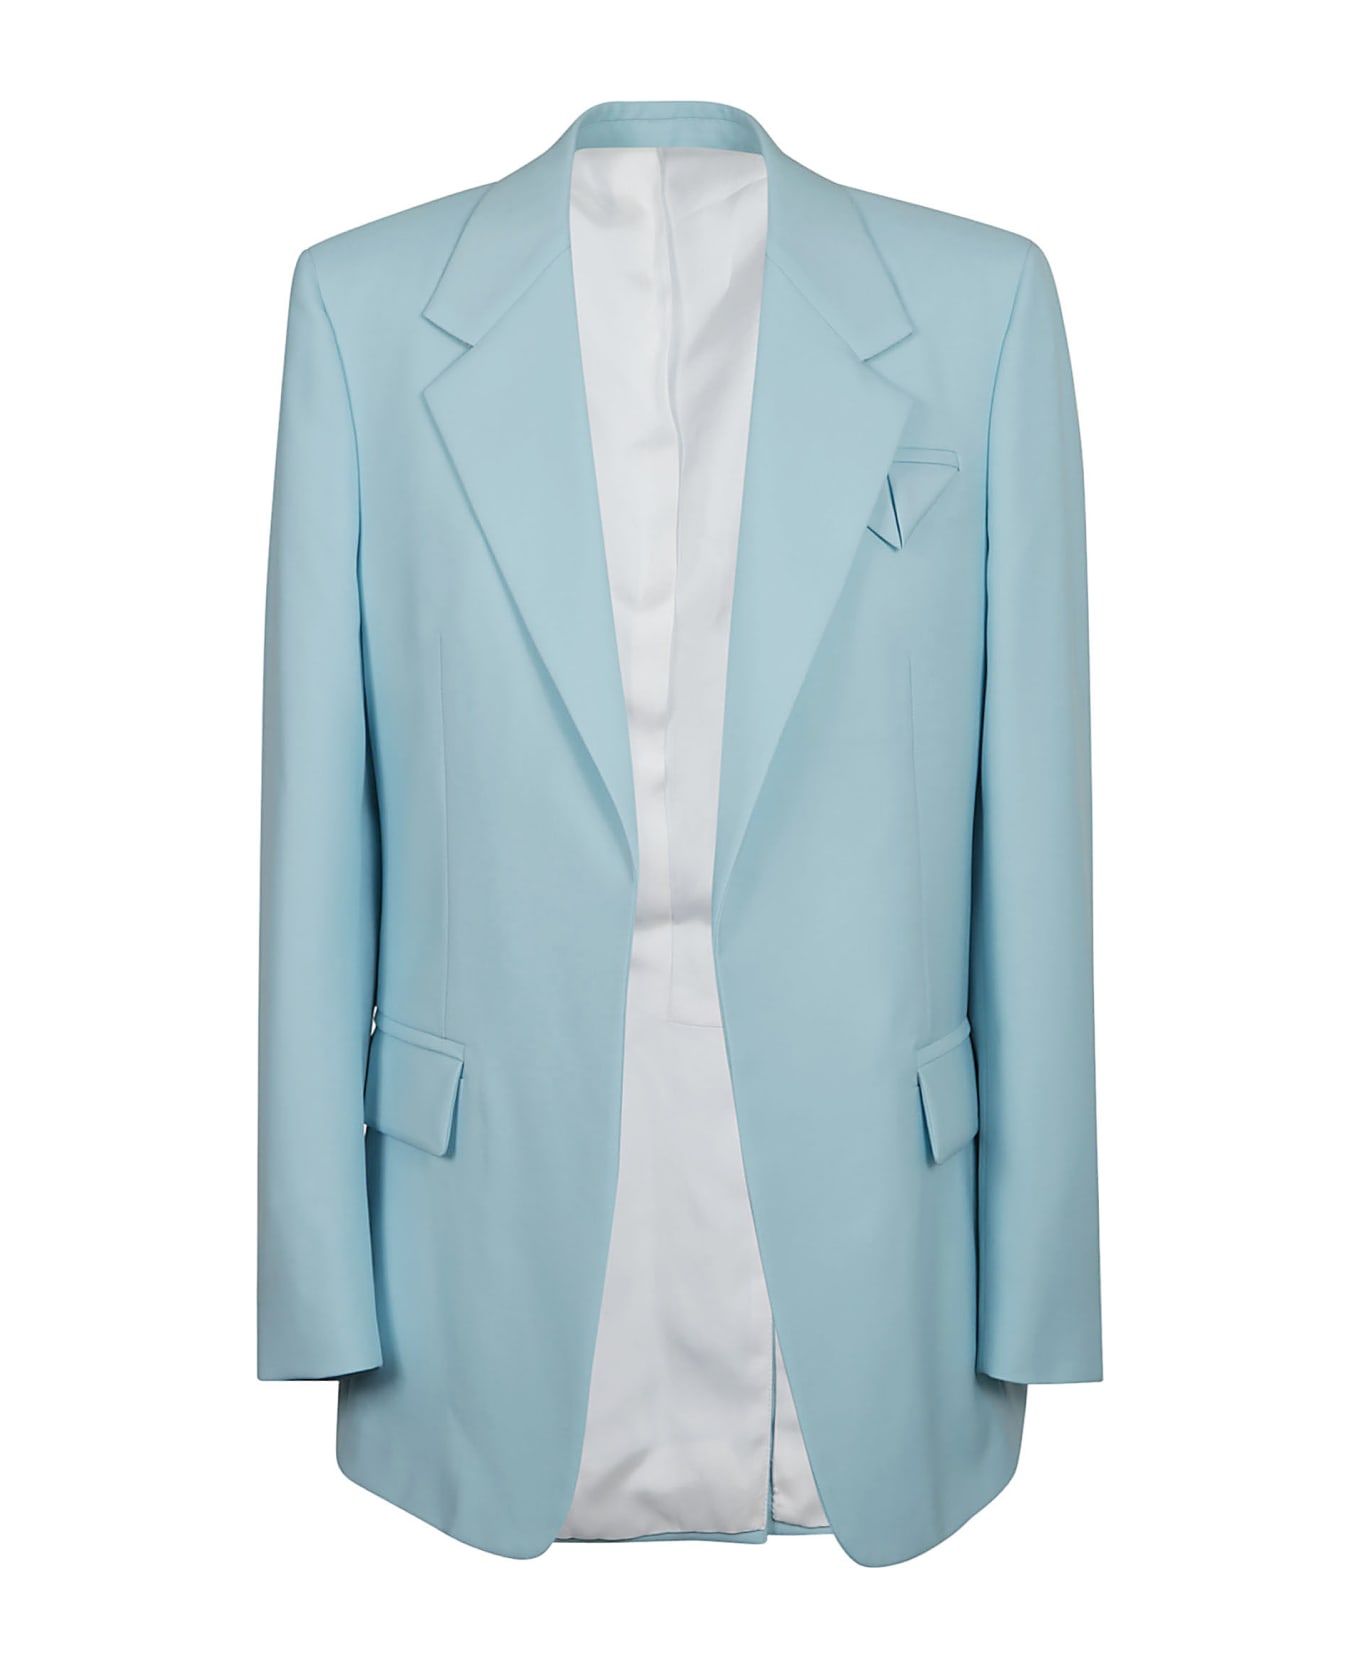 Bottega Veneta Light Wool Twill Belted Jacket - Pale Blue